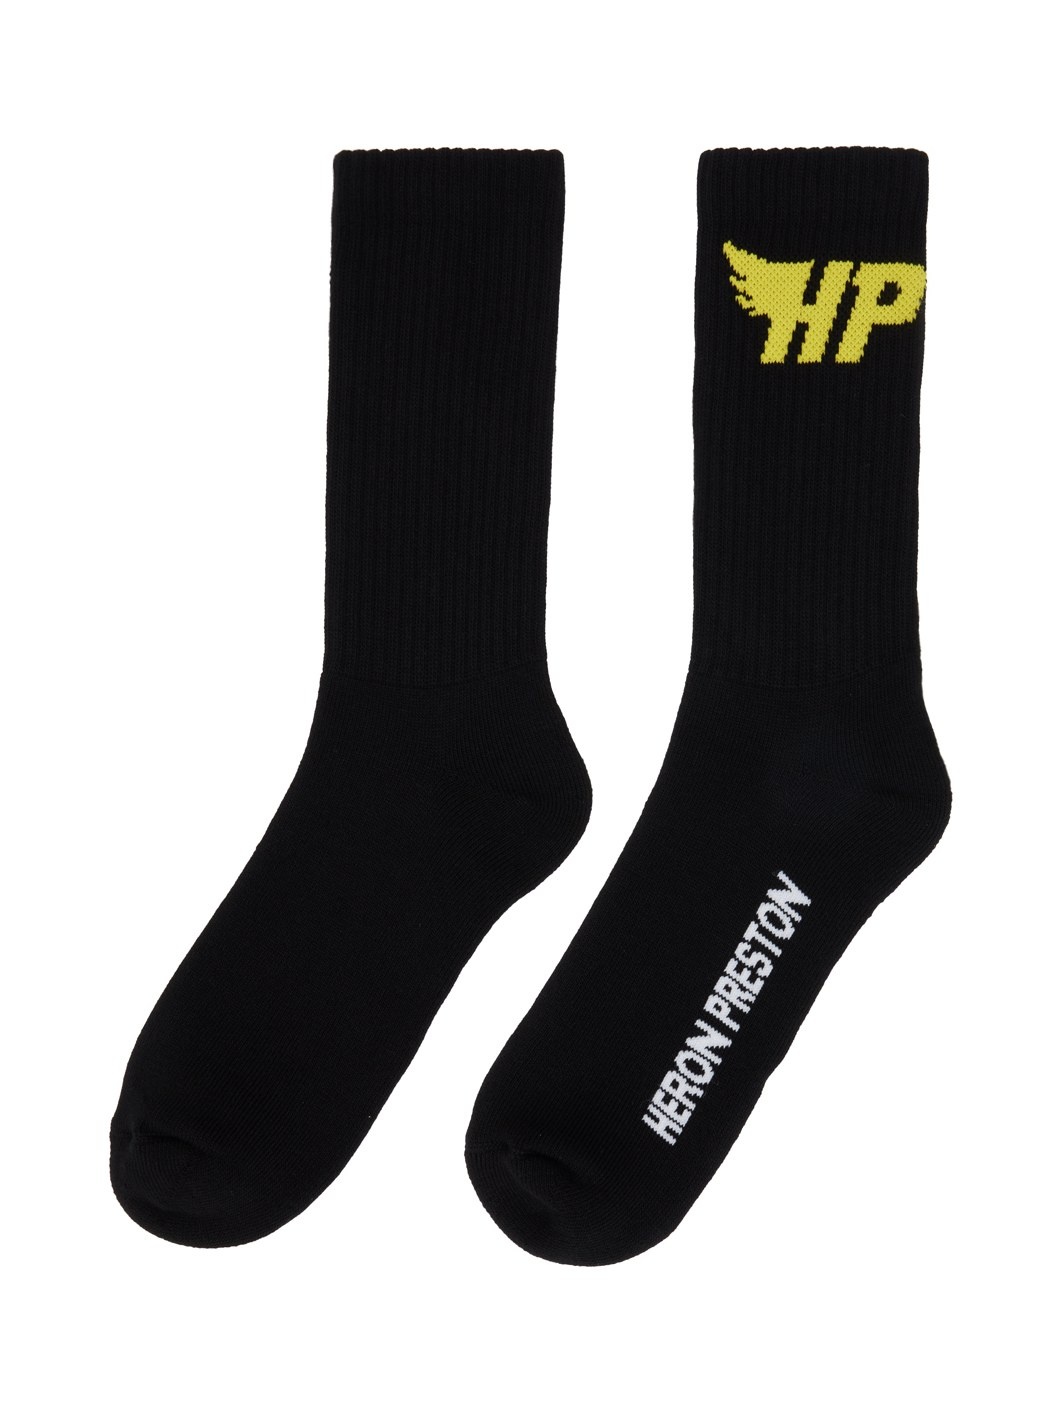 Black & Yellow HP Fly Socks - 2